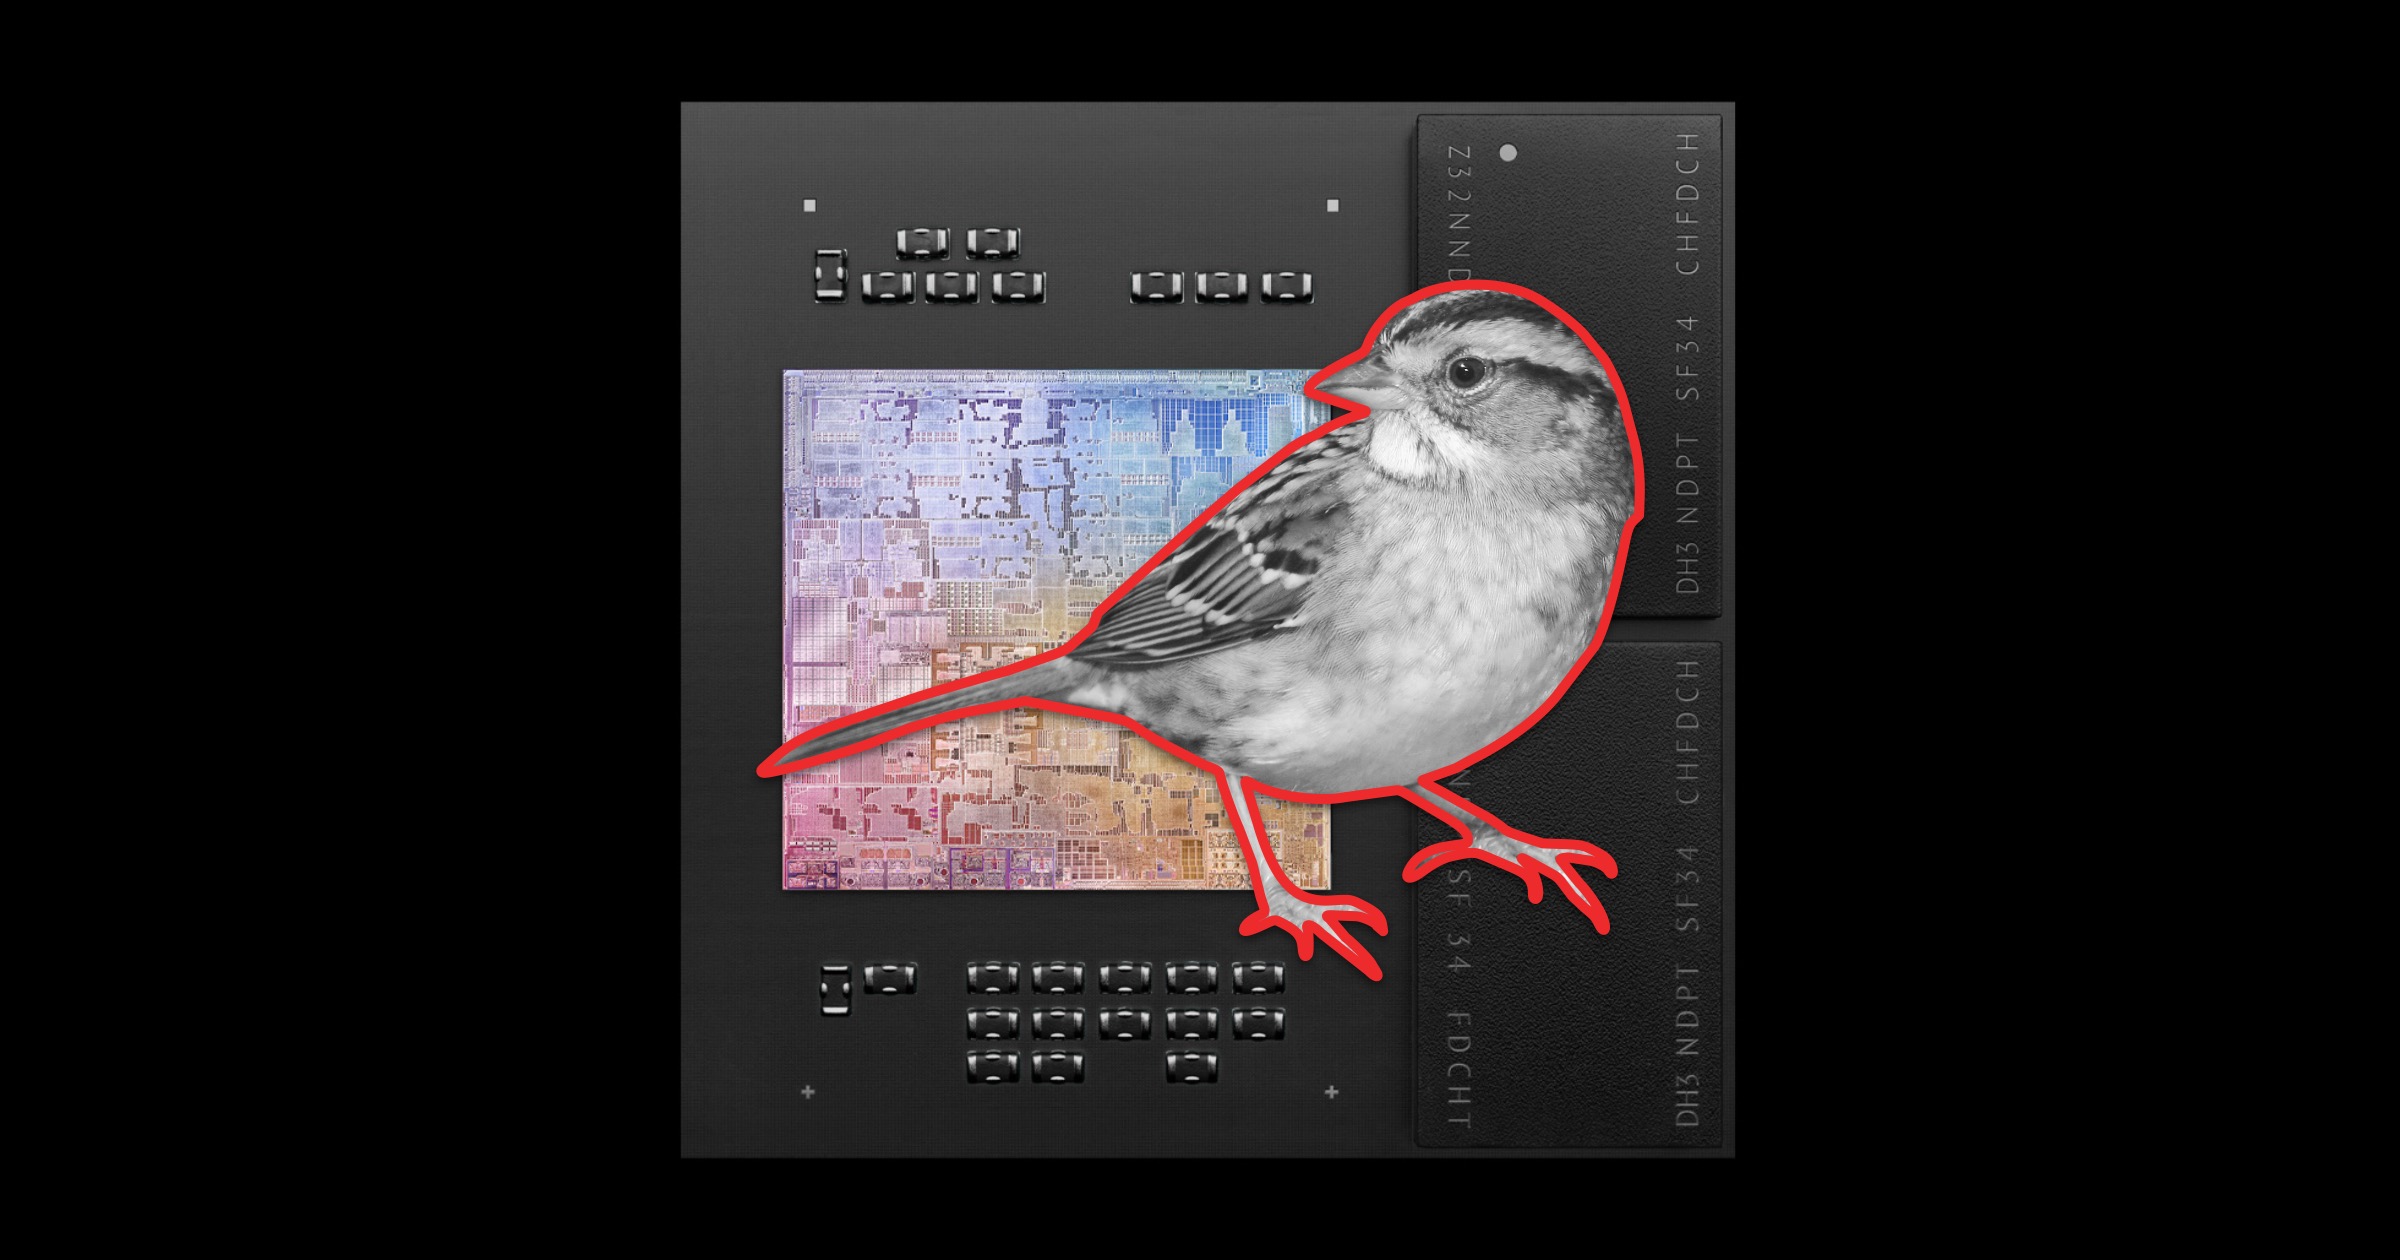 Silver sparrow malware